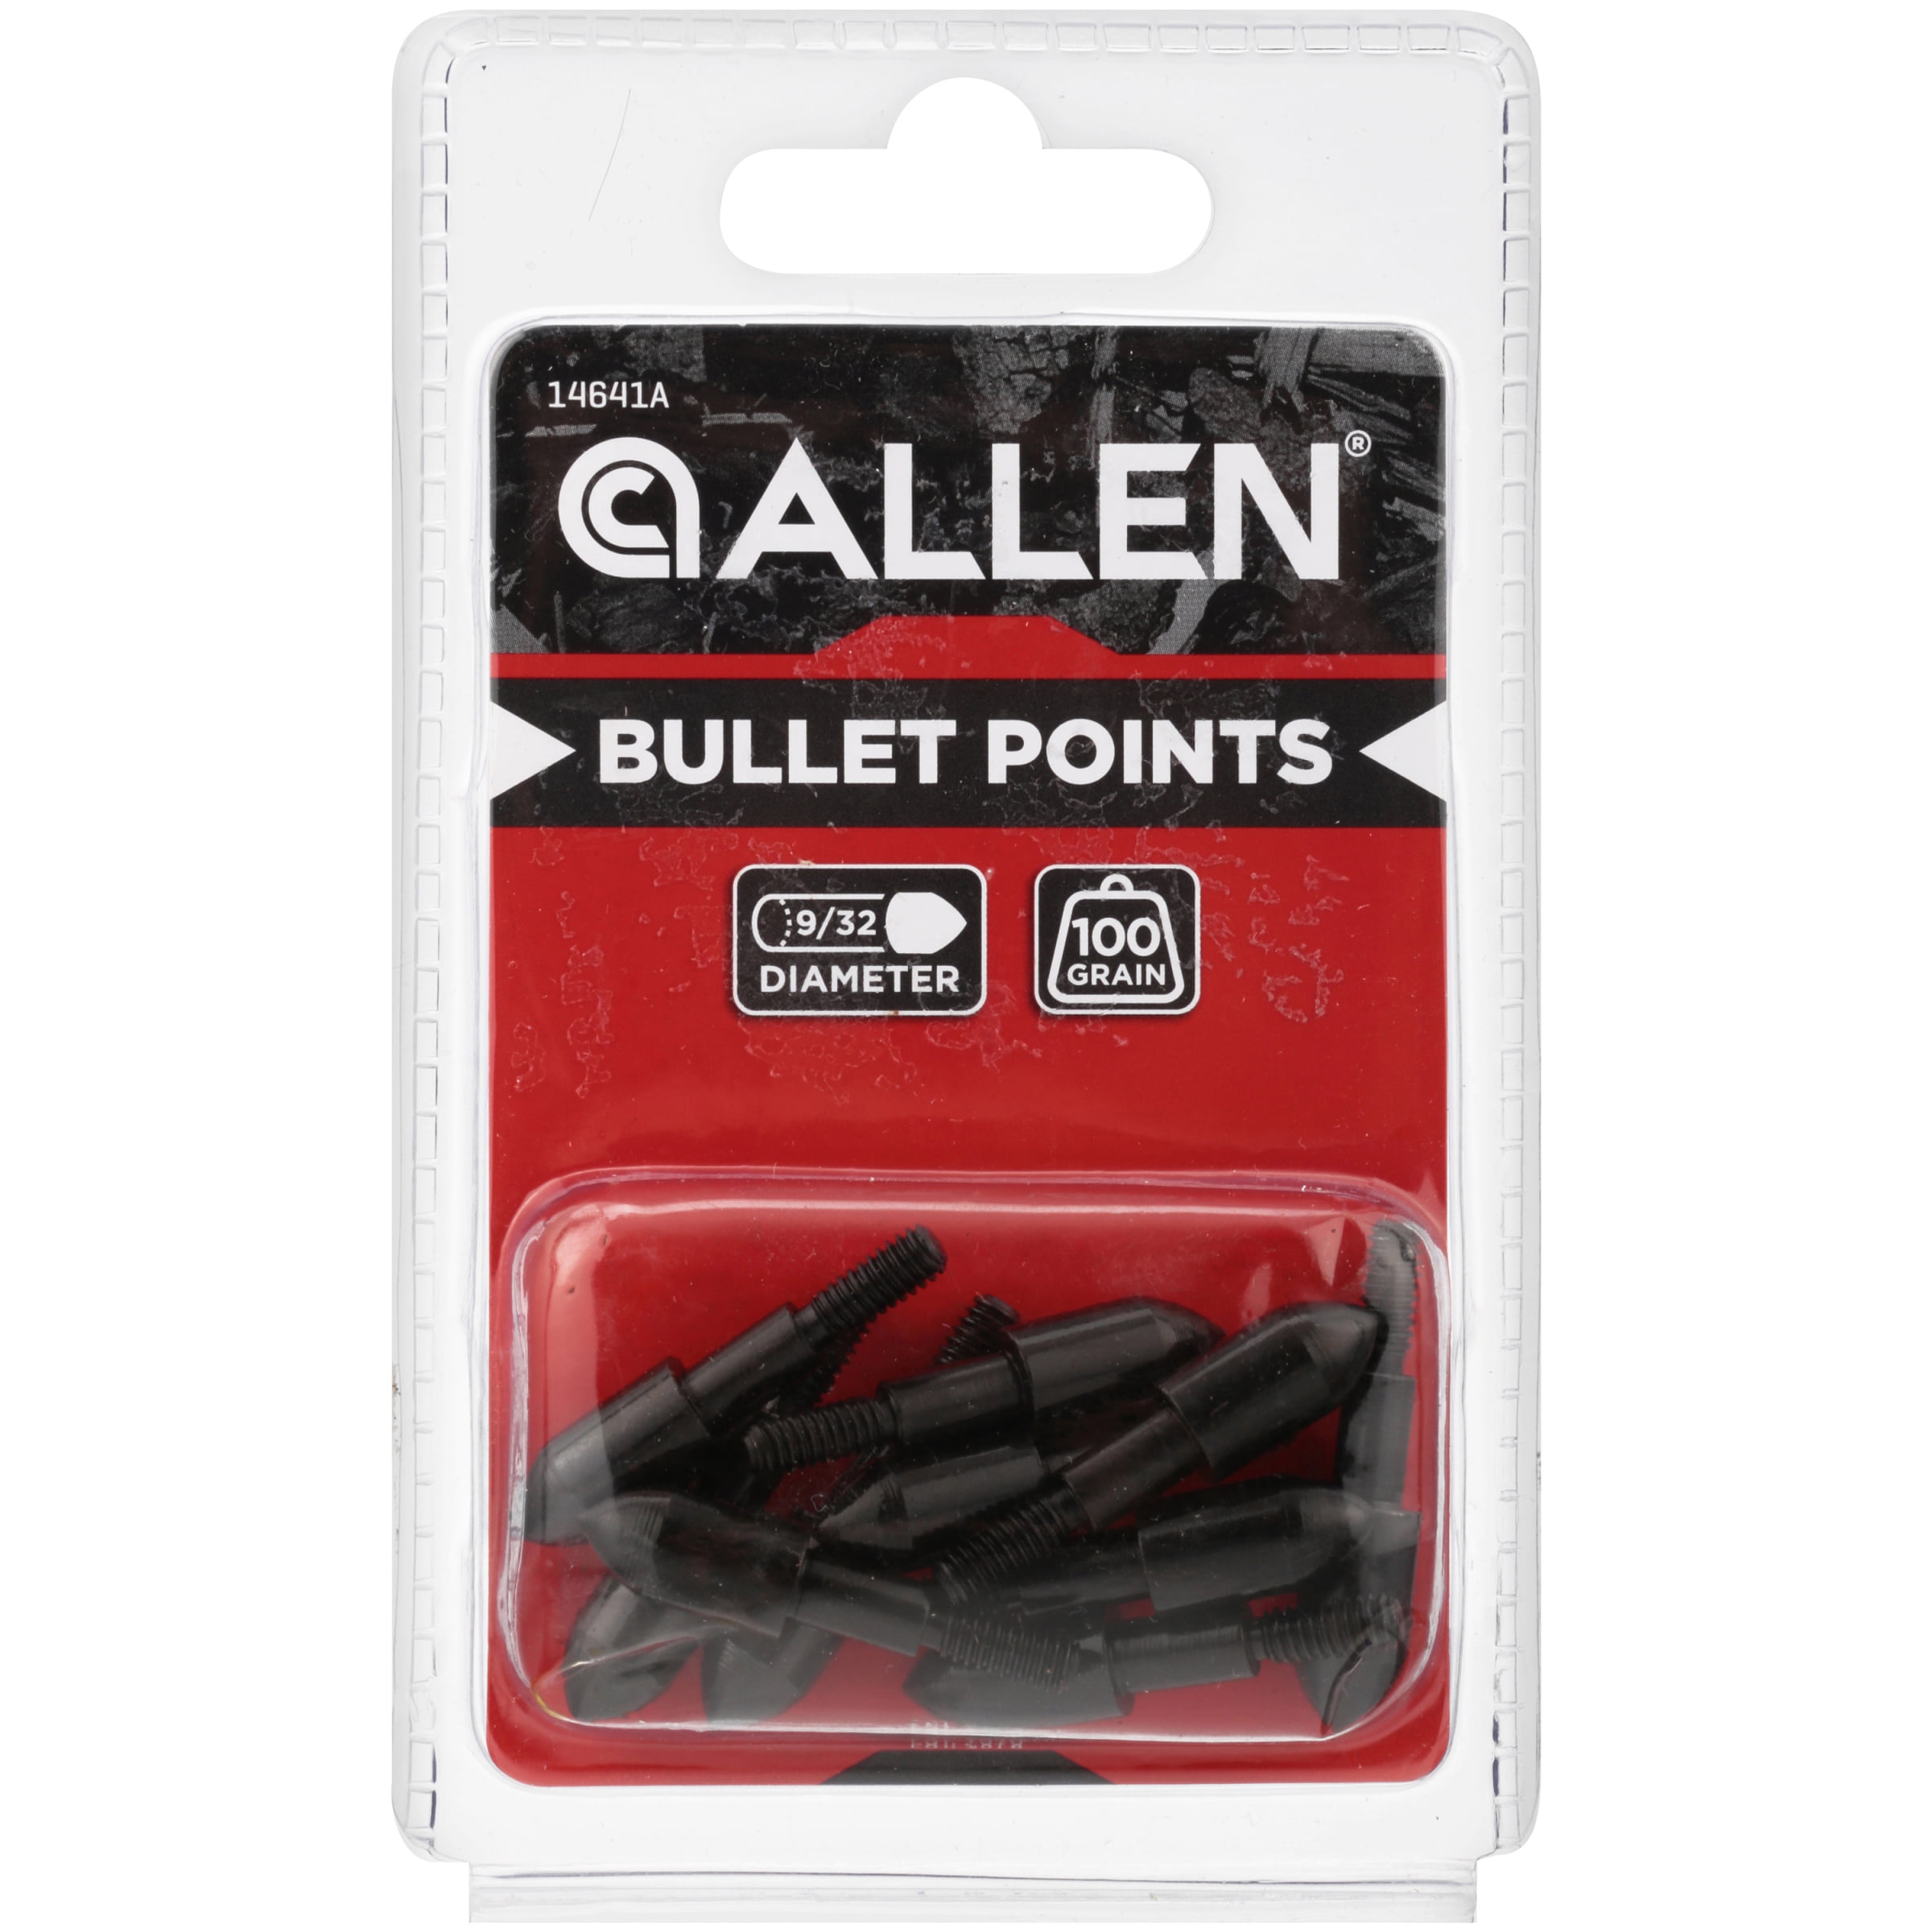 Allen Archery Bullet Points for Target Practice